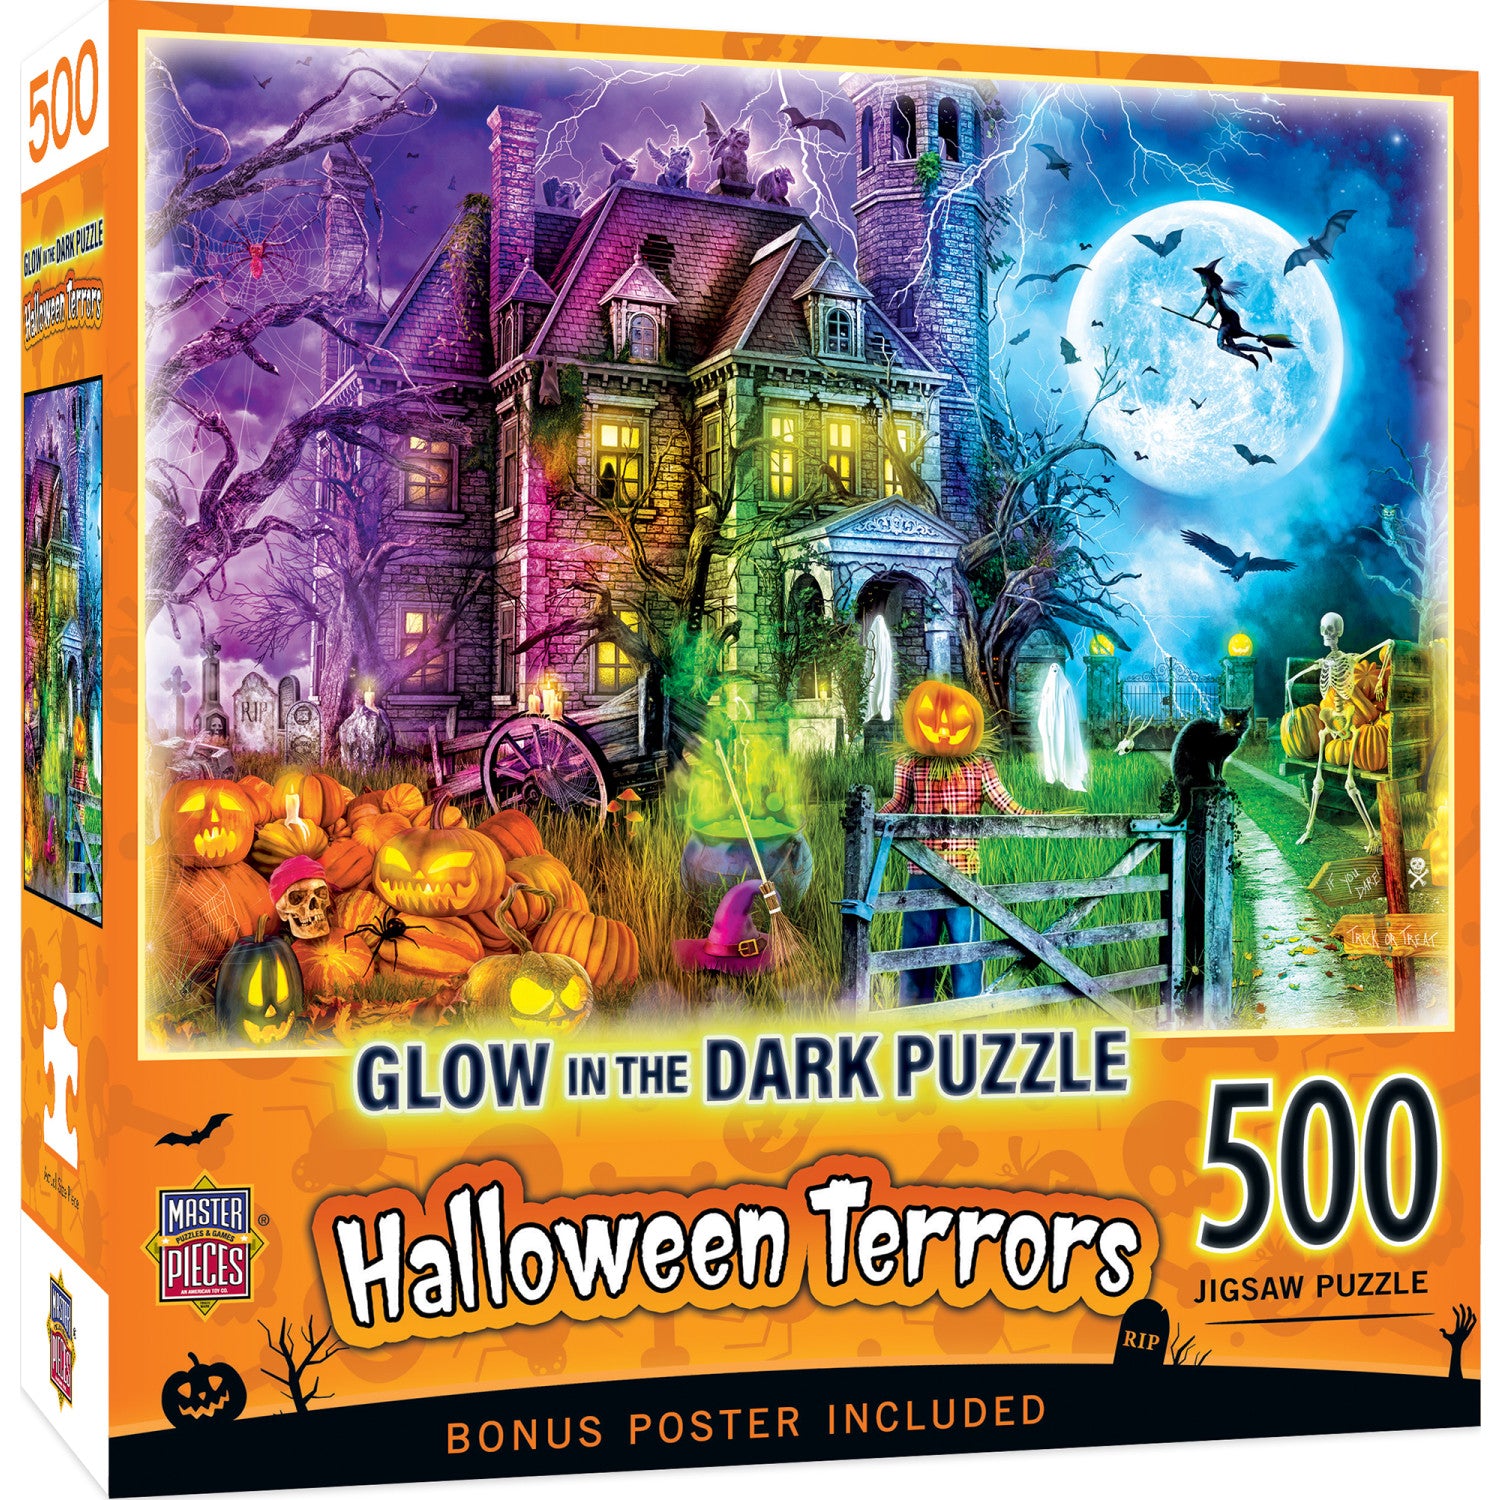 Glow in the Dark - Halloween Terrors 500 Piece Jigsaw Puzzle